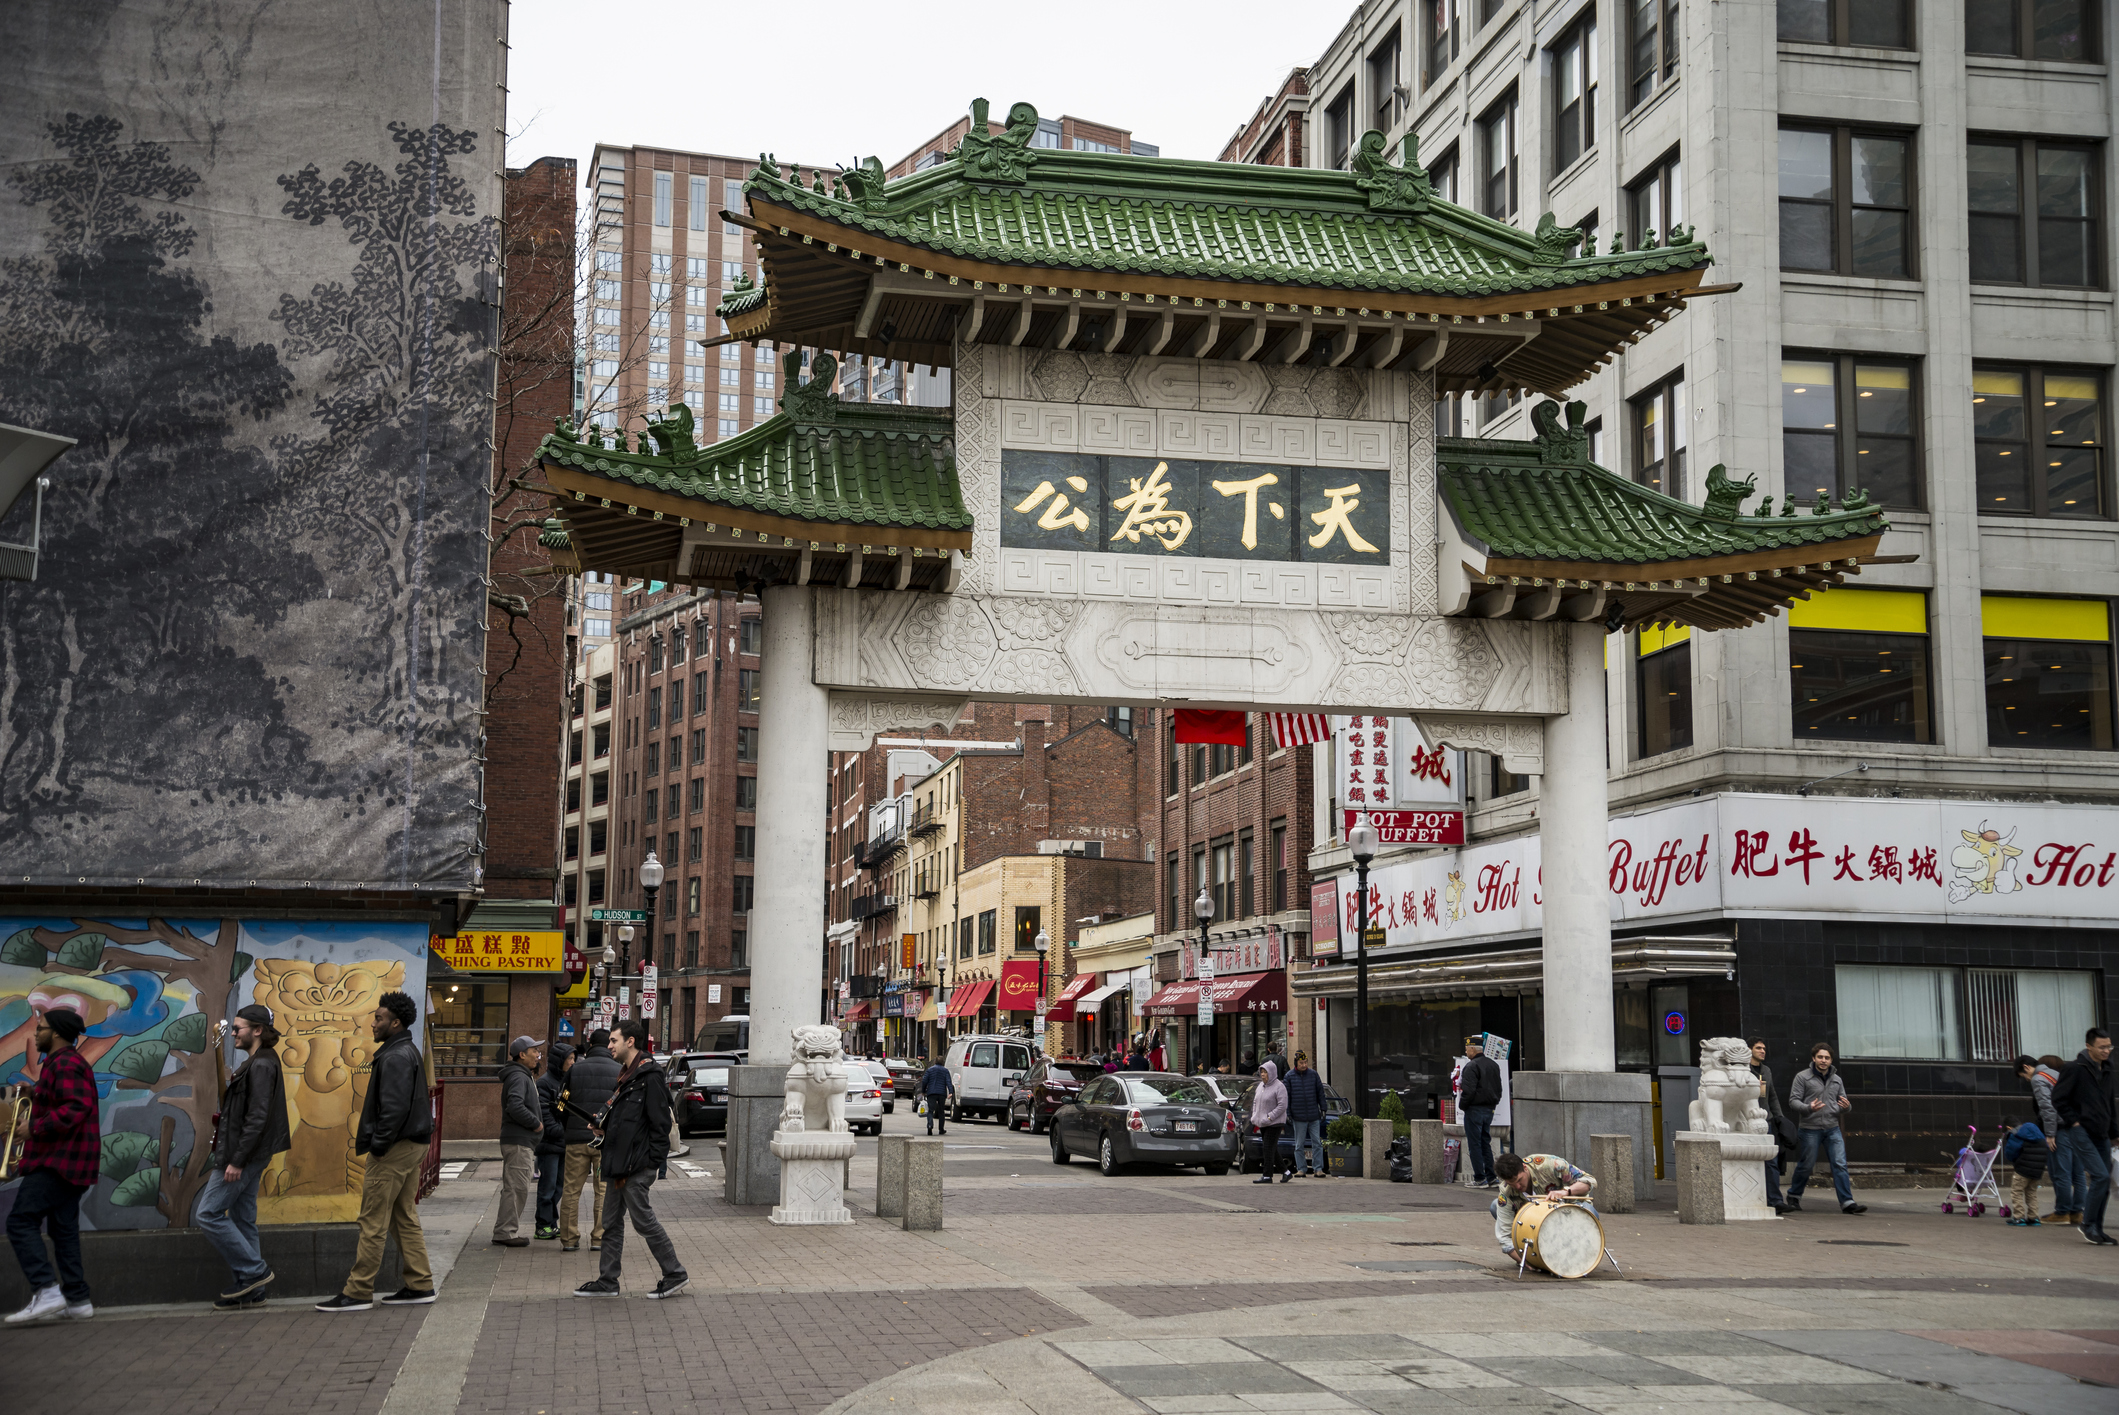 chinatown gate in Boston